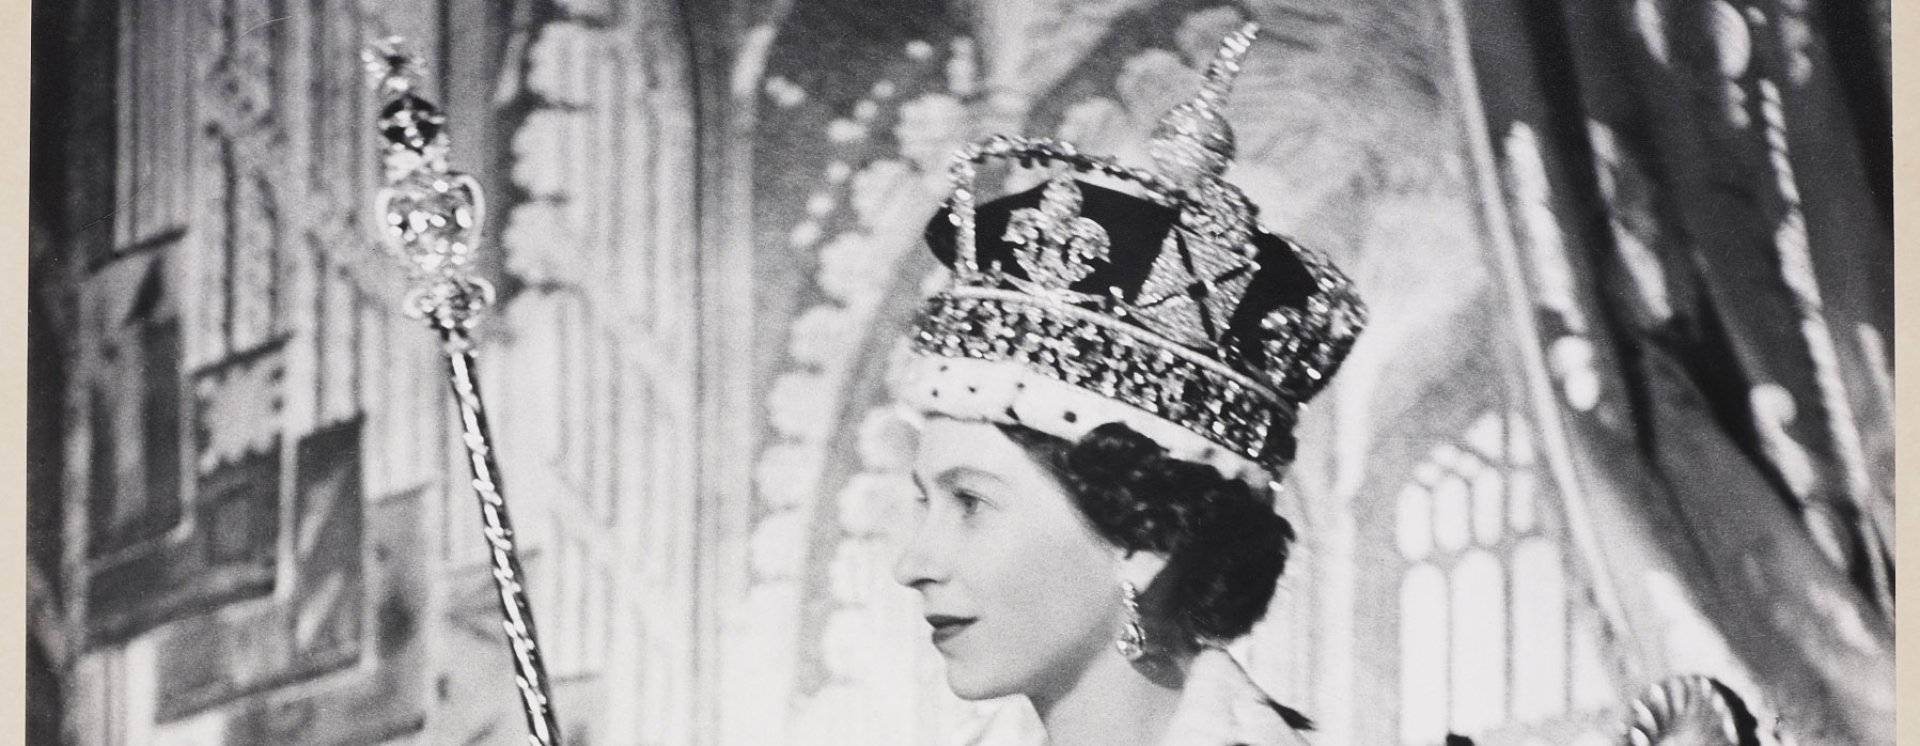 Coronation Portrait of Her Majesty Queen Elizabeth II